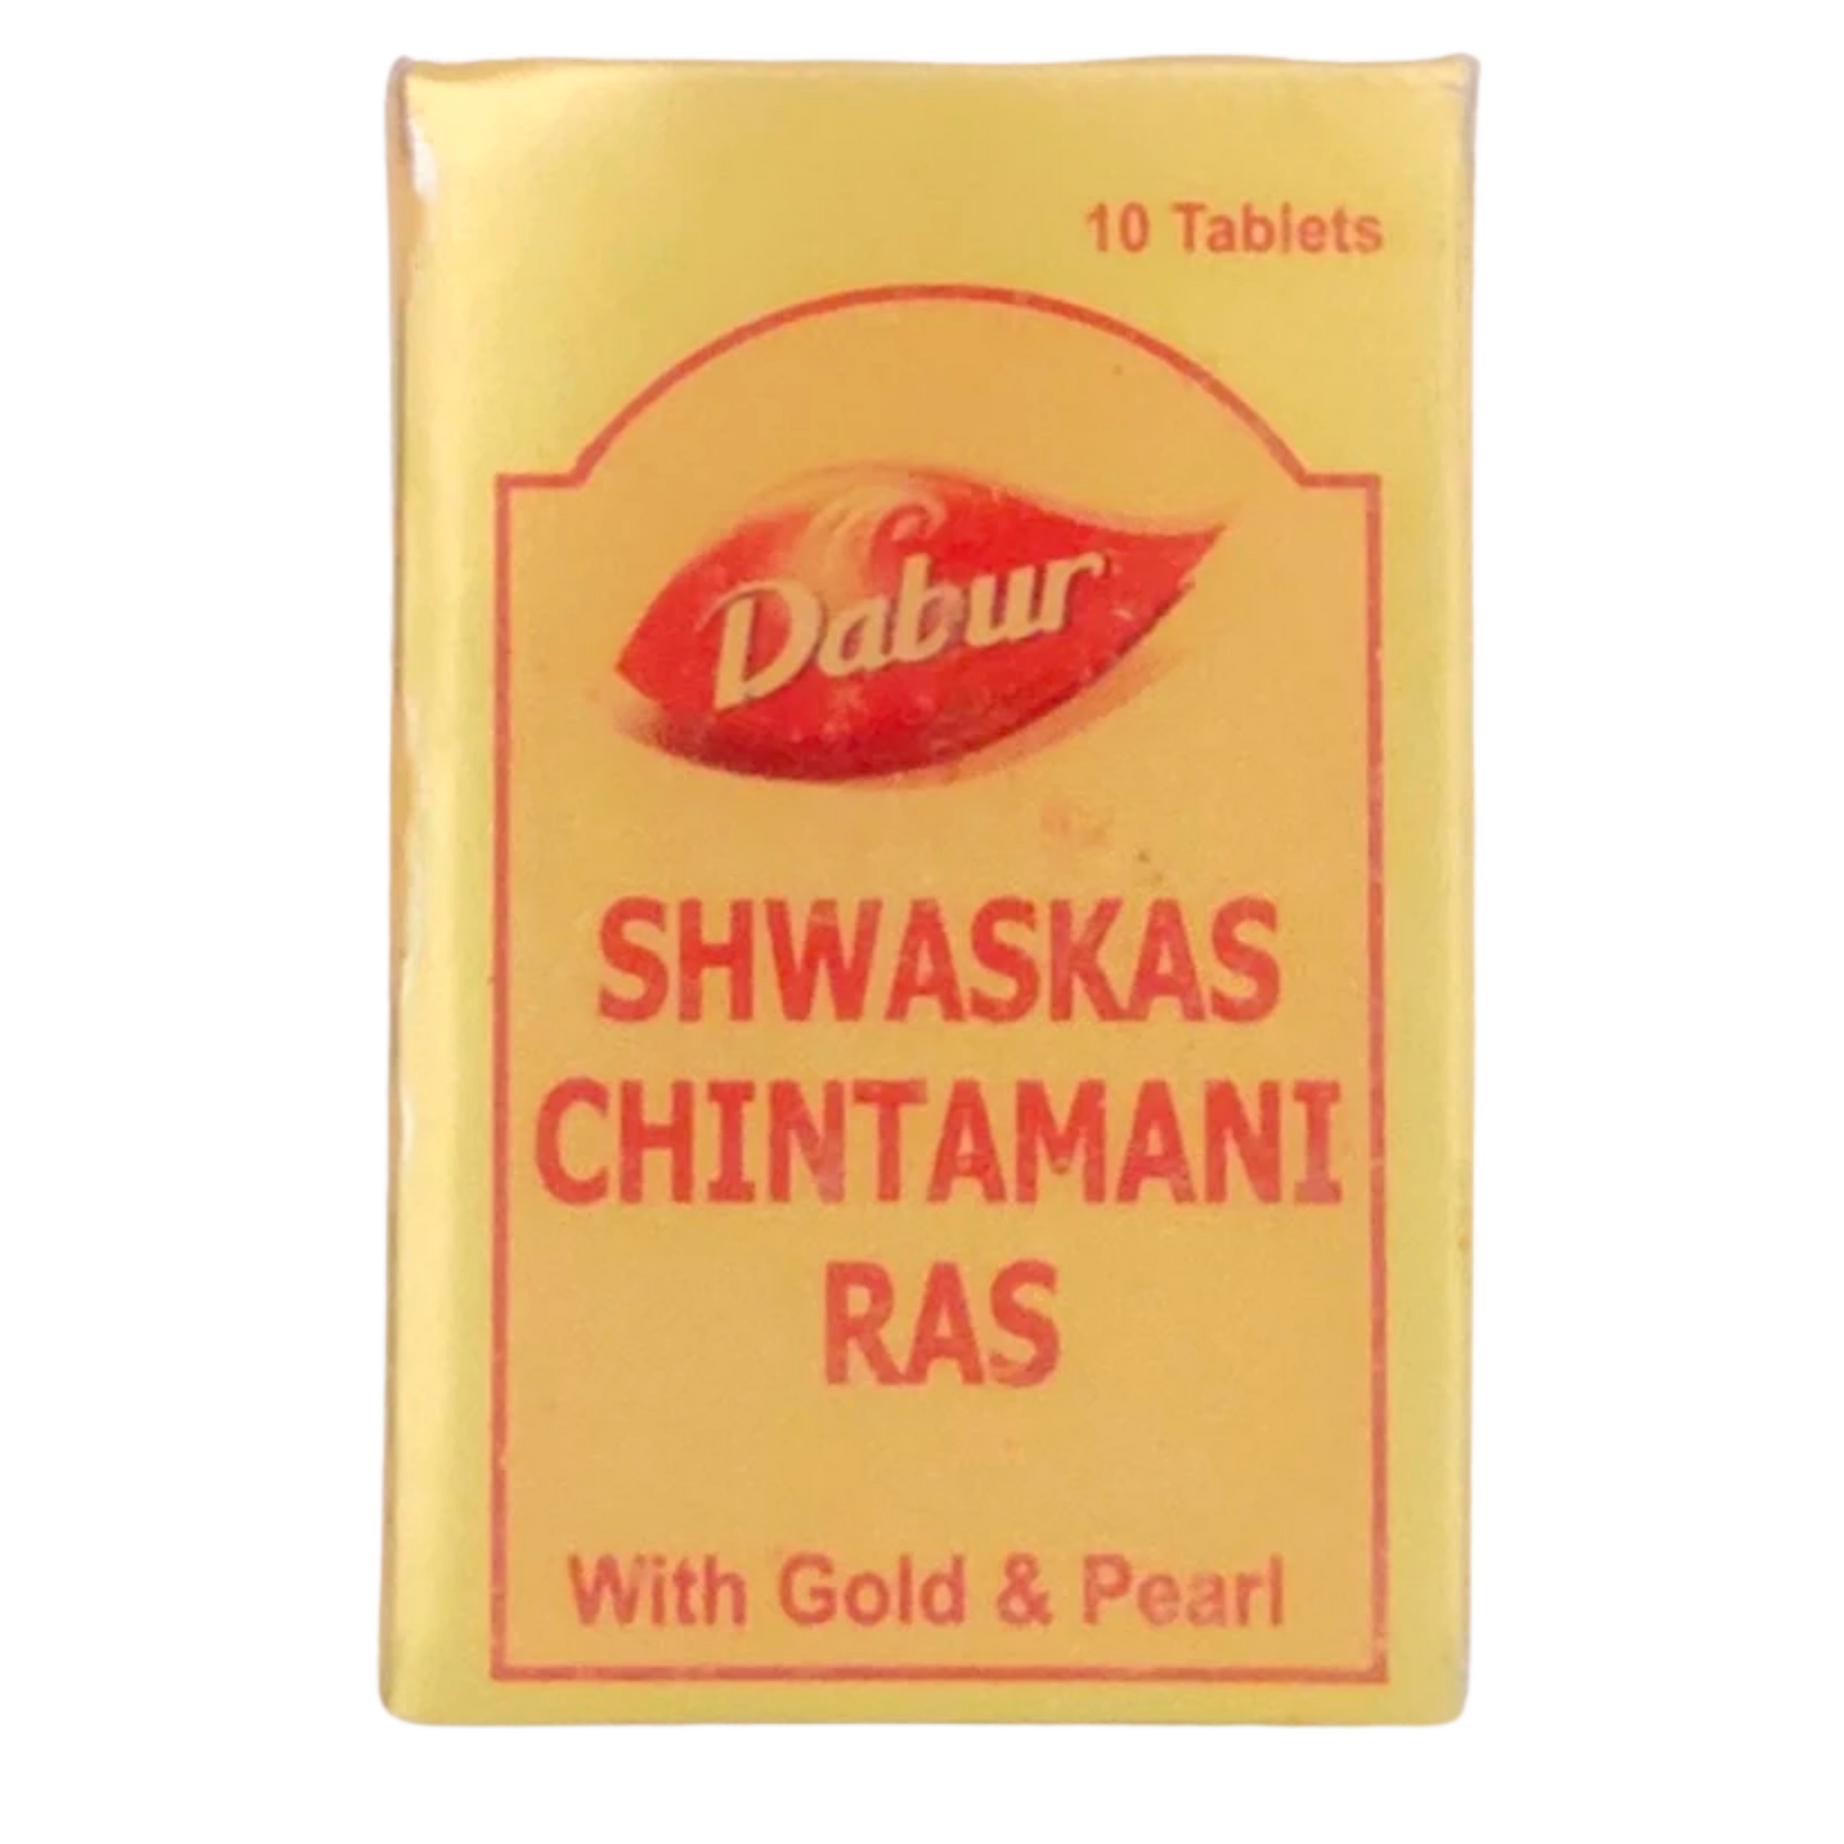 Shop Dabur Shwaskas Chintamani Ras - 10Tablets at price 830.00 from Dabur Online - Ayush Care